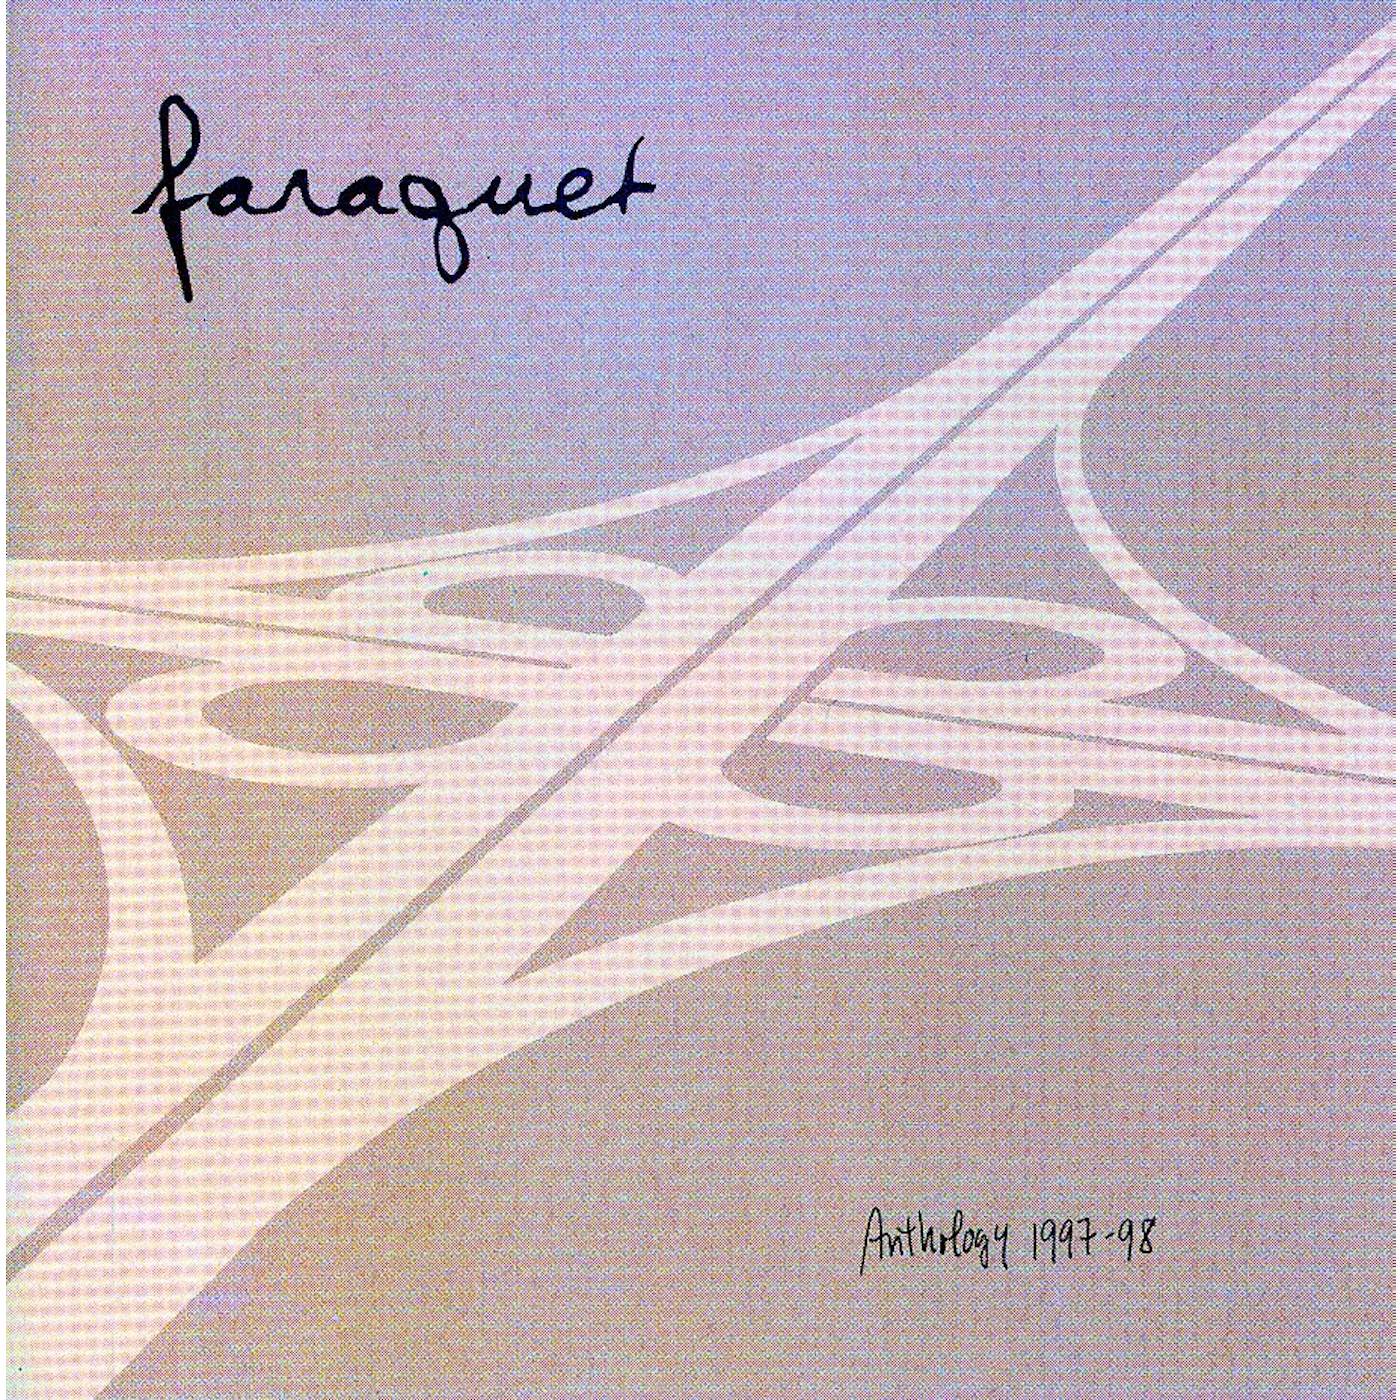 Faraquet ANTHOLOGY 1997-98 CD